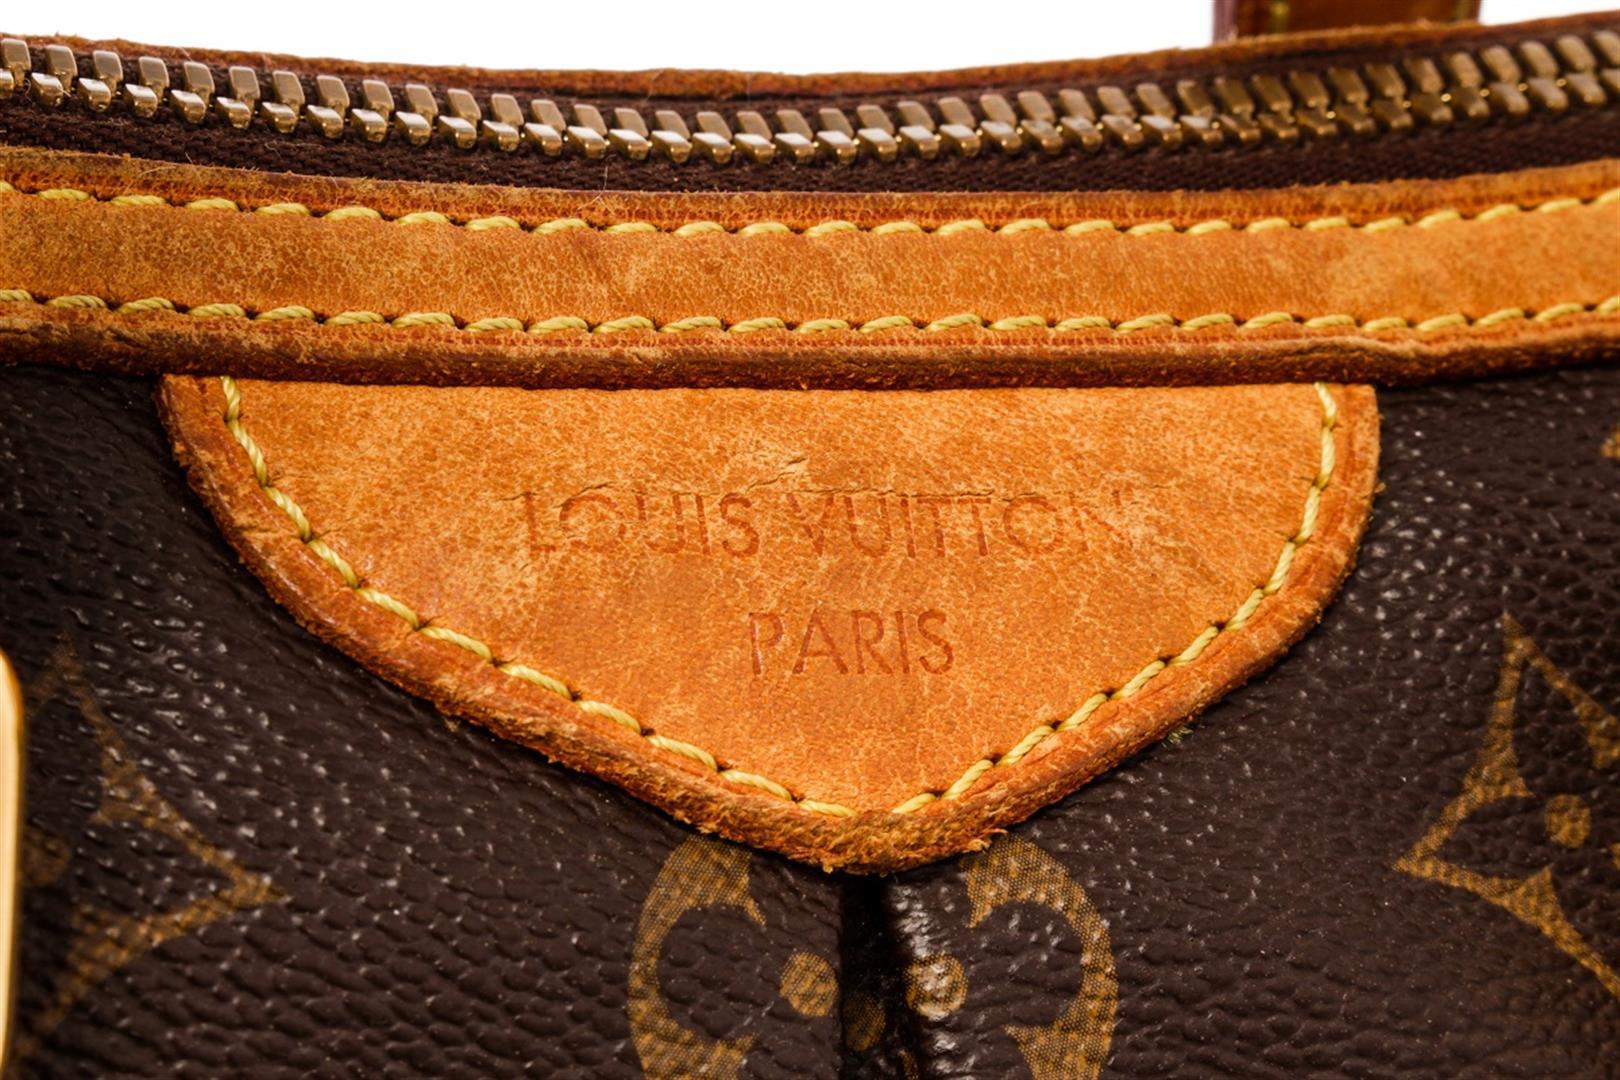 Louis Vuitton Brown Monogram Palermo PM Shoulder Bag